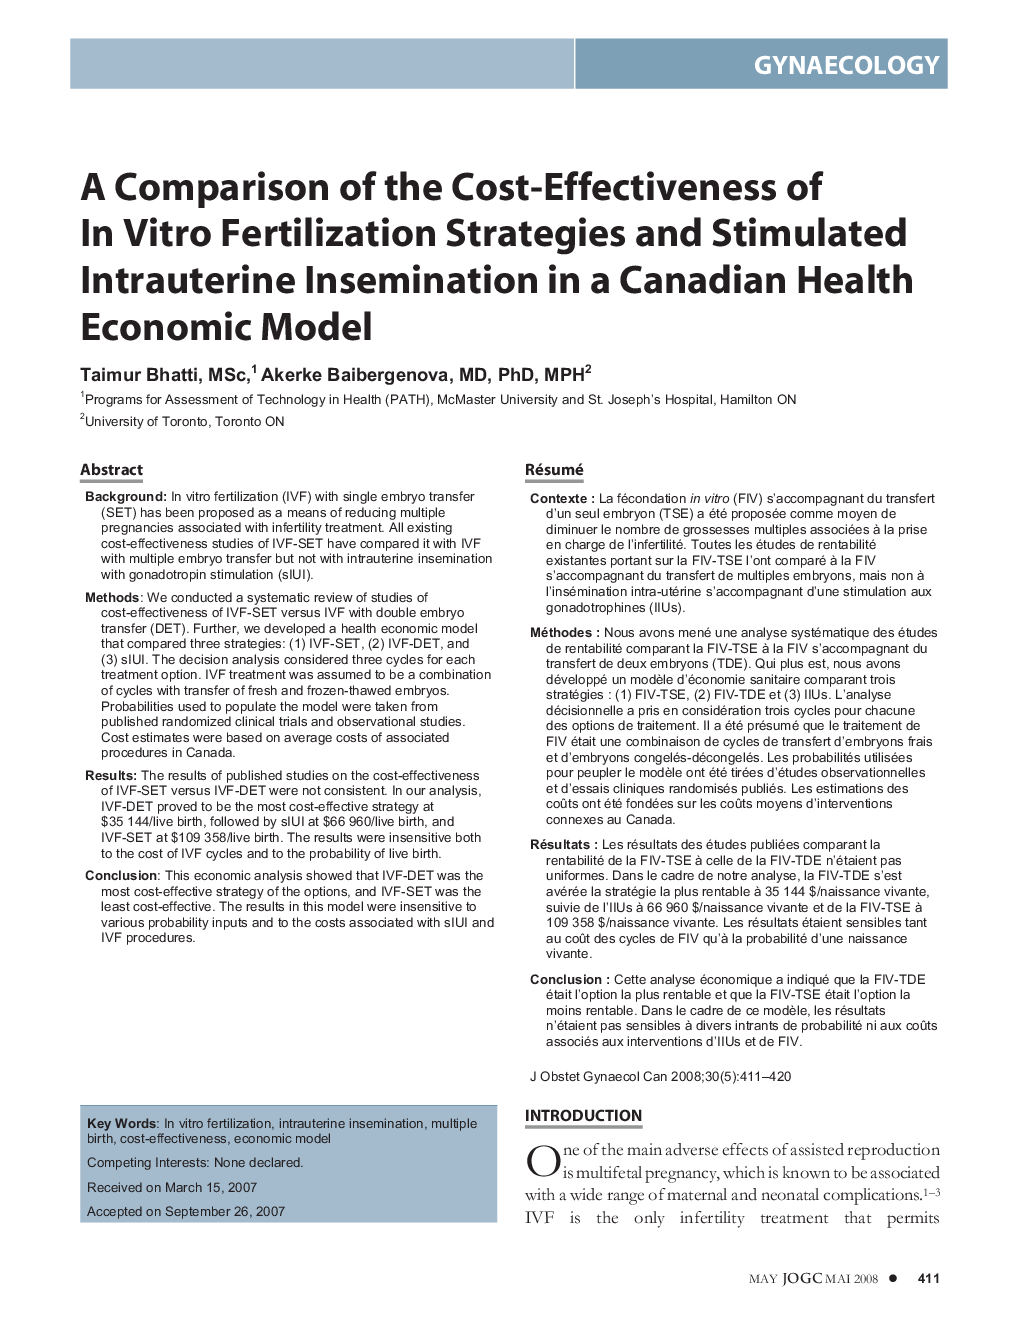 A Comparison of the Cost-Effectiveness of In Vitro Fertilization Strategies and Stimulated Intrauterine Insemination in a Canadian Health Economic Model